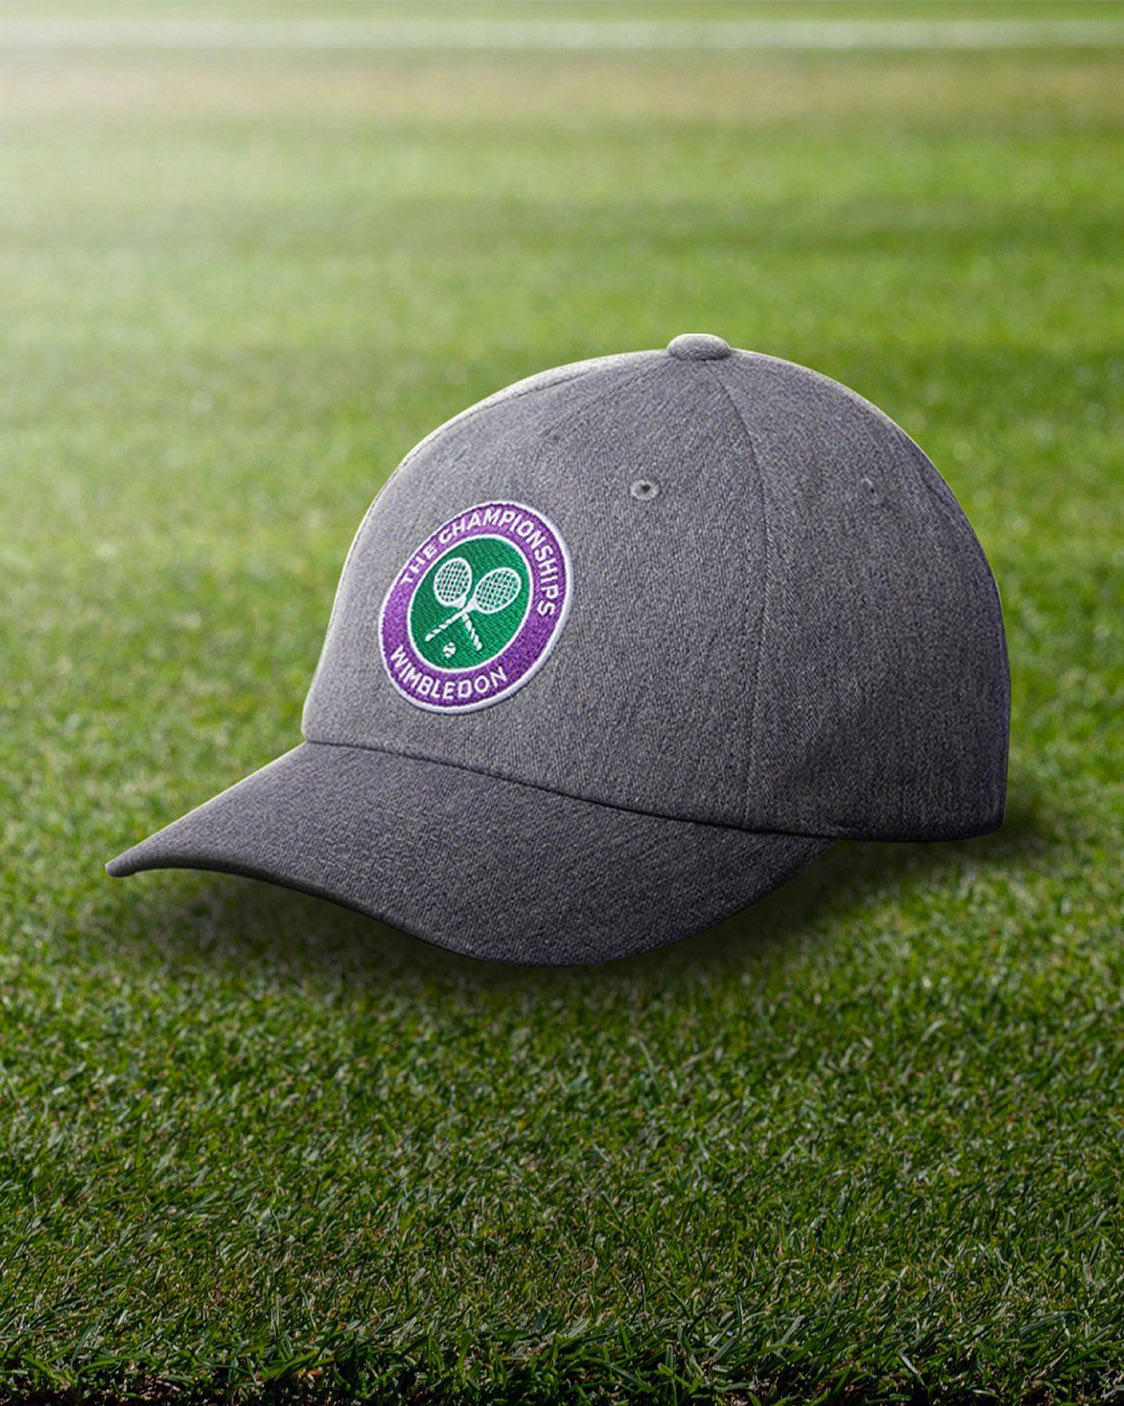 image  1 Spring has finally sprung - a good time to explore our #Wimbledon cap collection